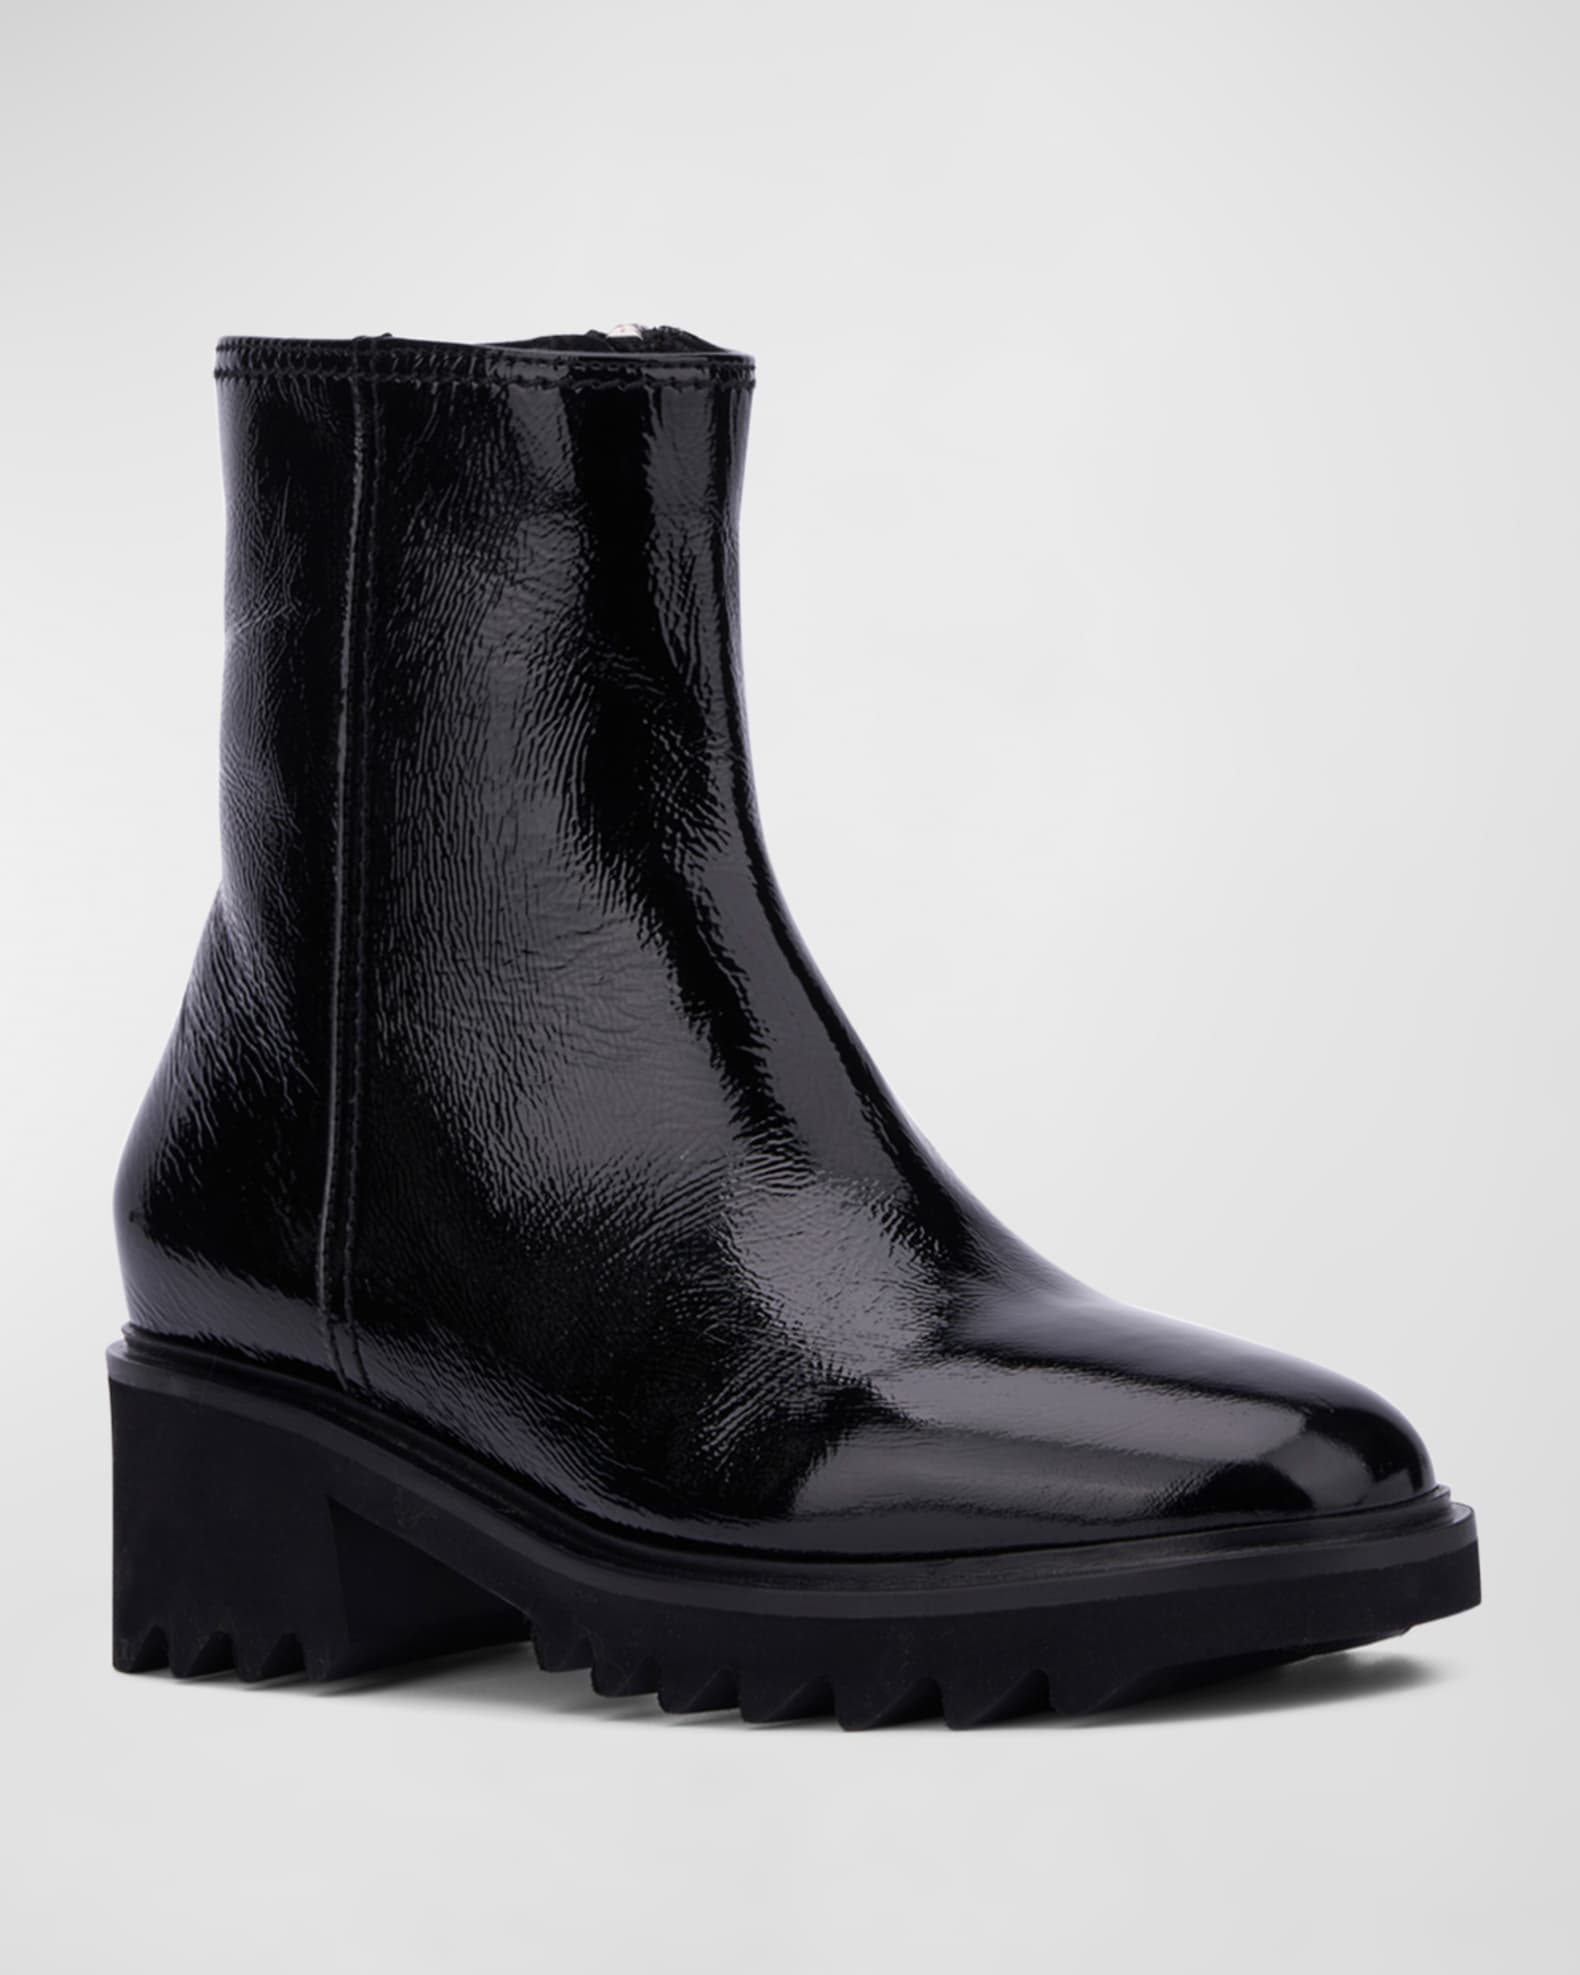 Aquatalia Saundra Leather Zip Ankle Boots | Neiman Marcus